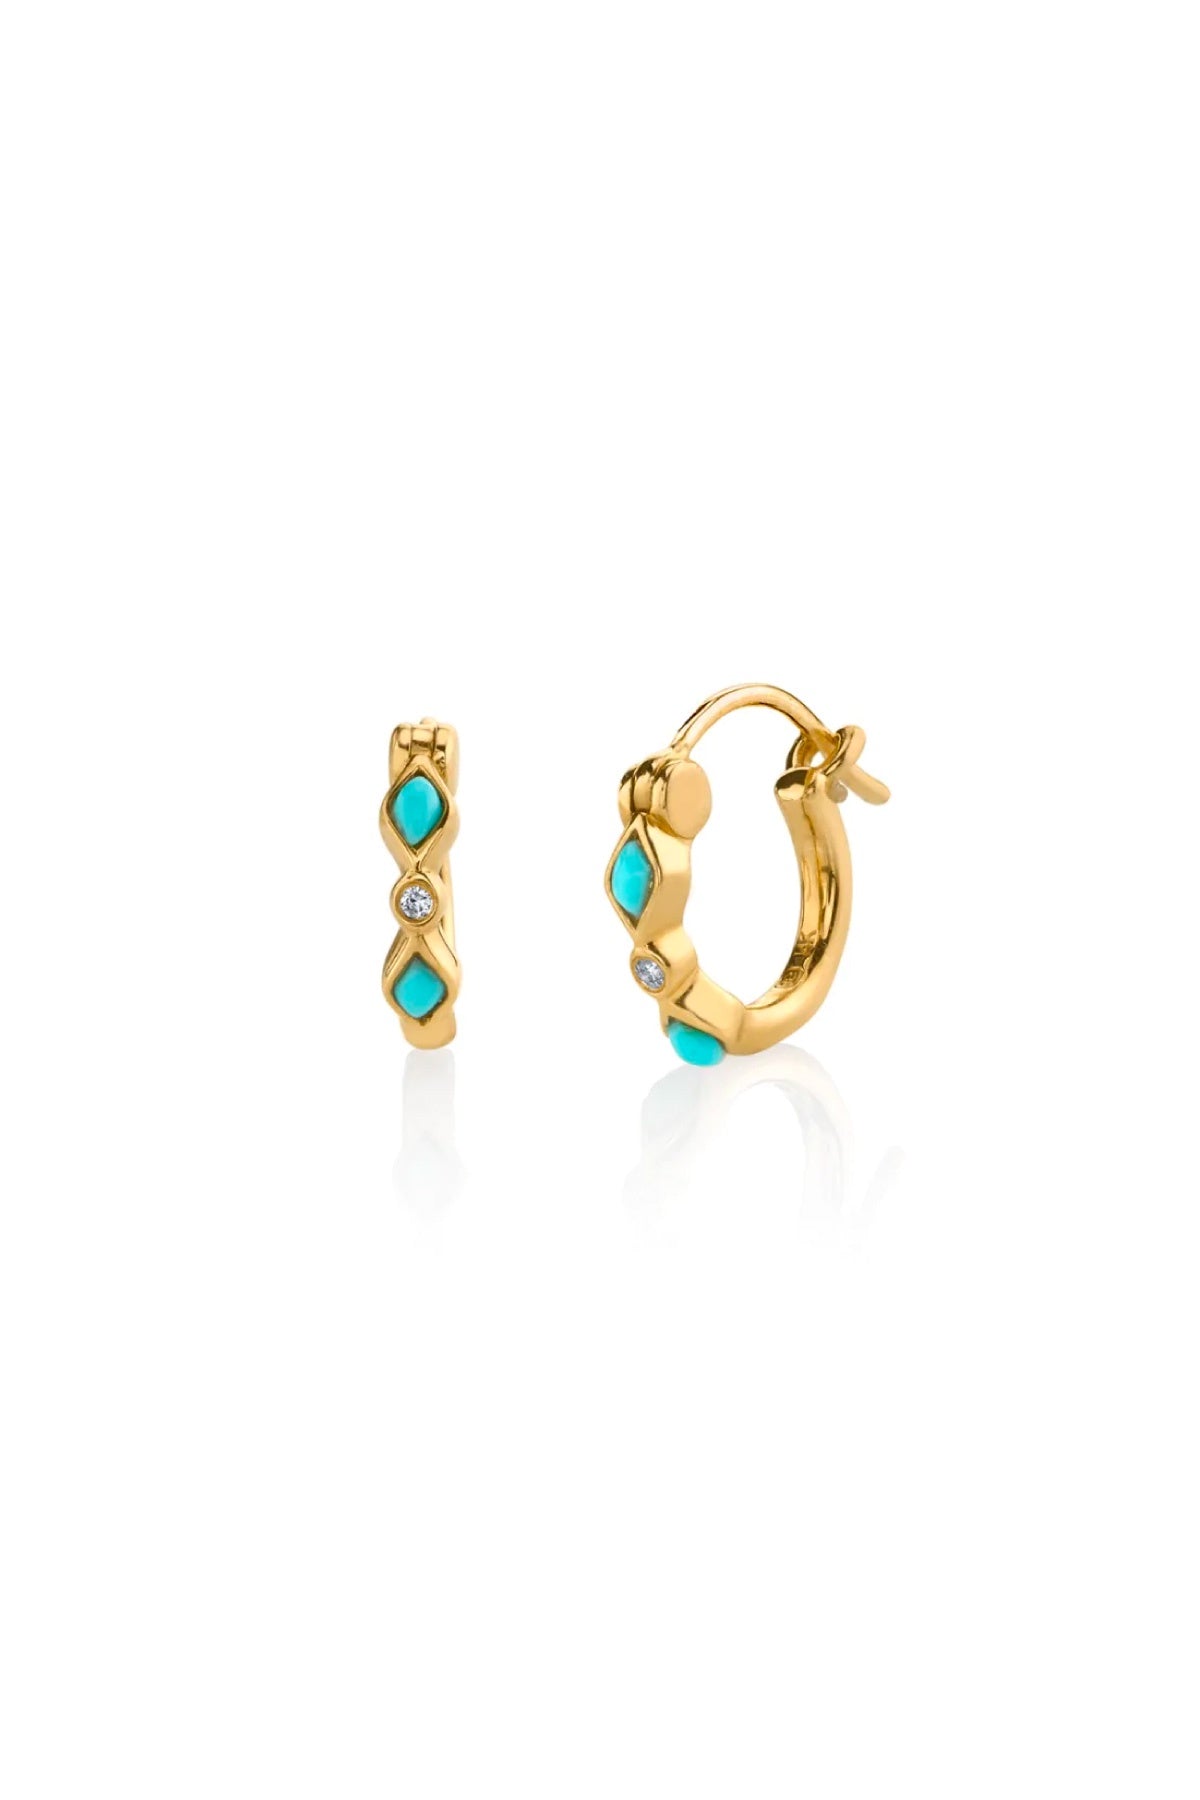 Sydney Evan Turquoise & Diamond Bezel Huggie Hoop Earrings - Yellow Gold